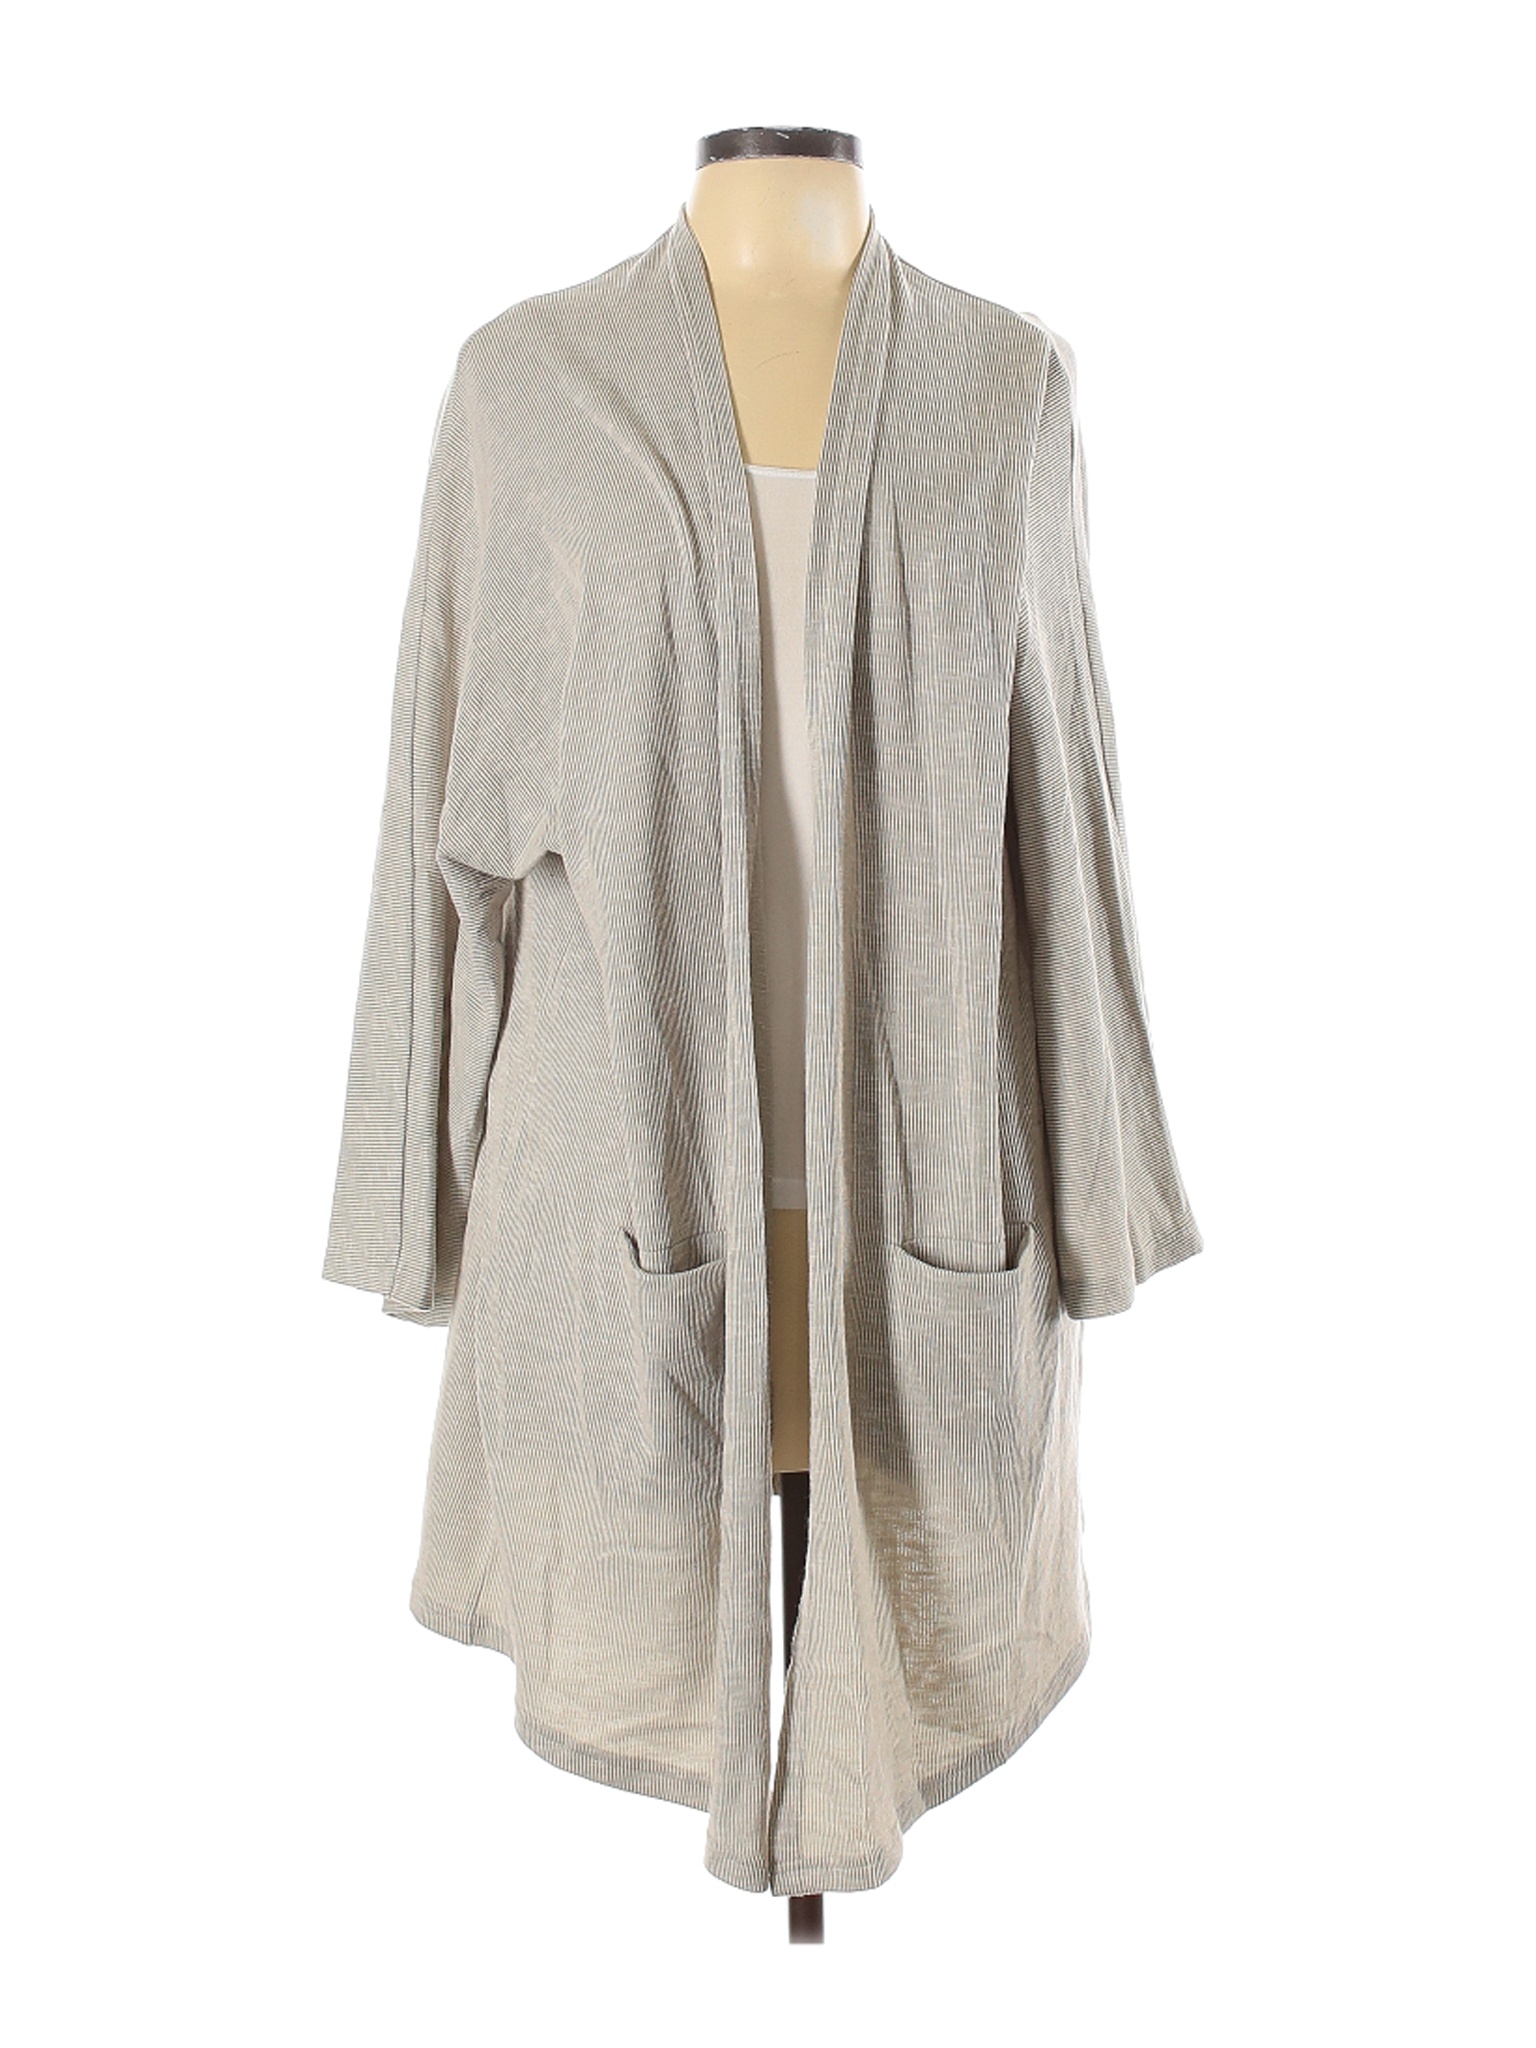 DONNI Women Gray Cardigan One Size | eBay